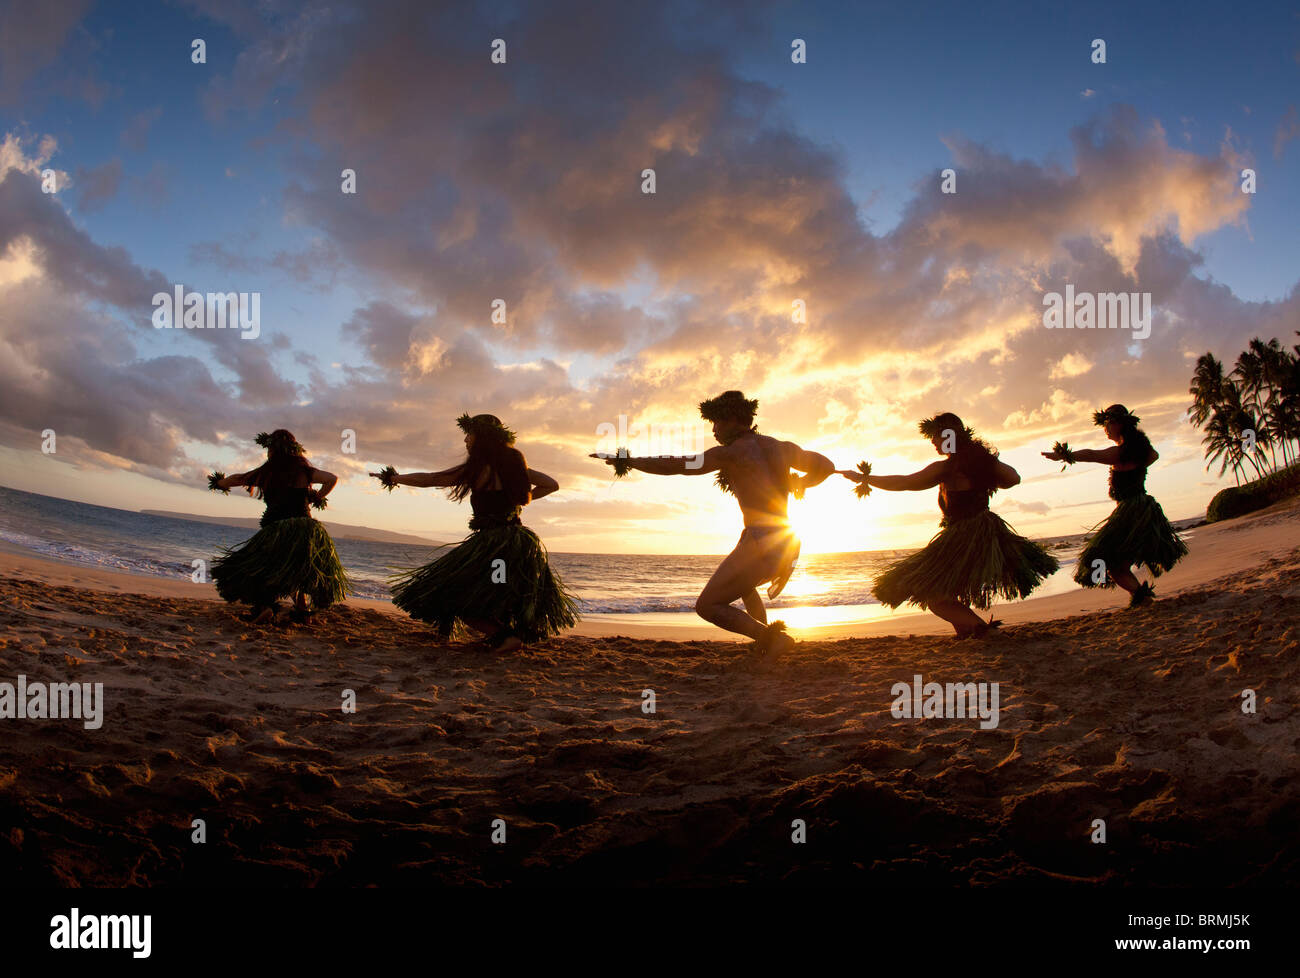 Silhouette of hula dancers at sunset at Palauea Beach, Maui, Hawaii. Stock Photo